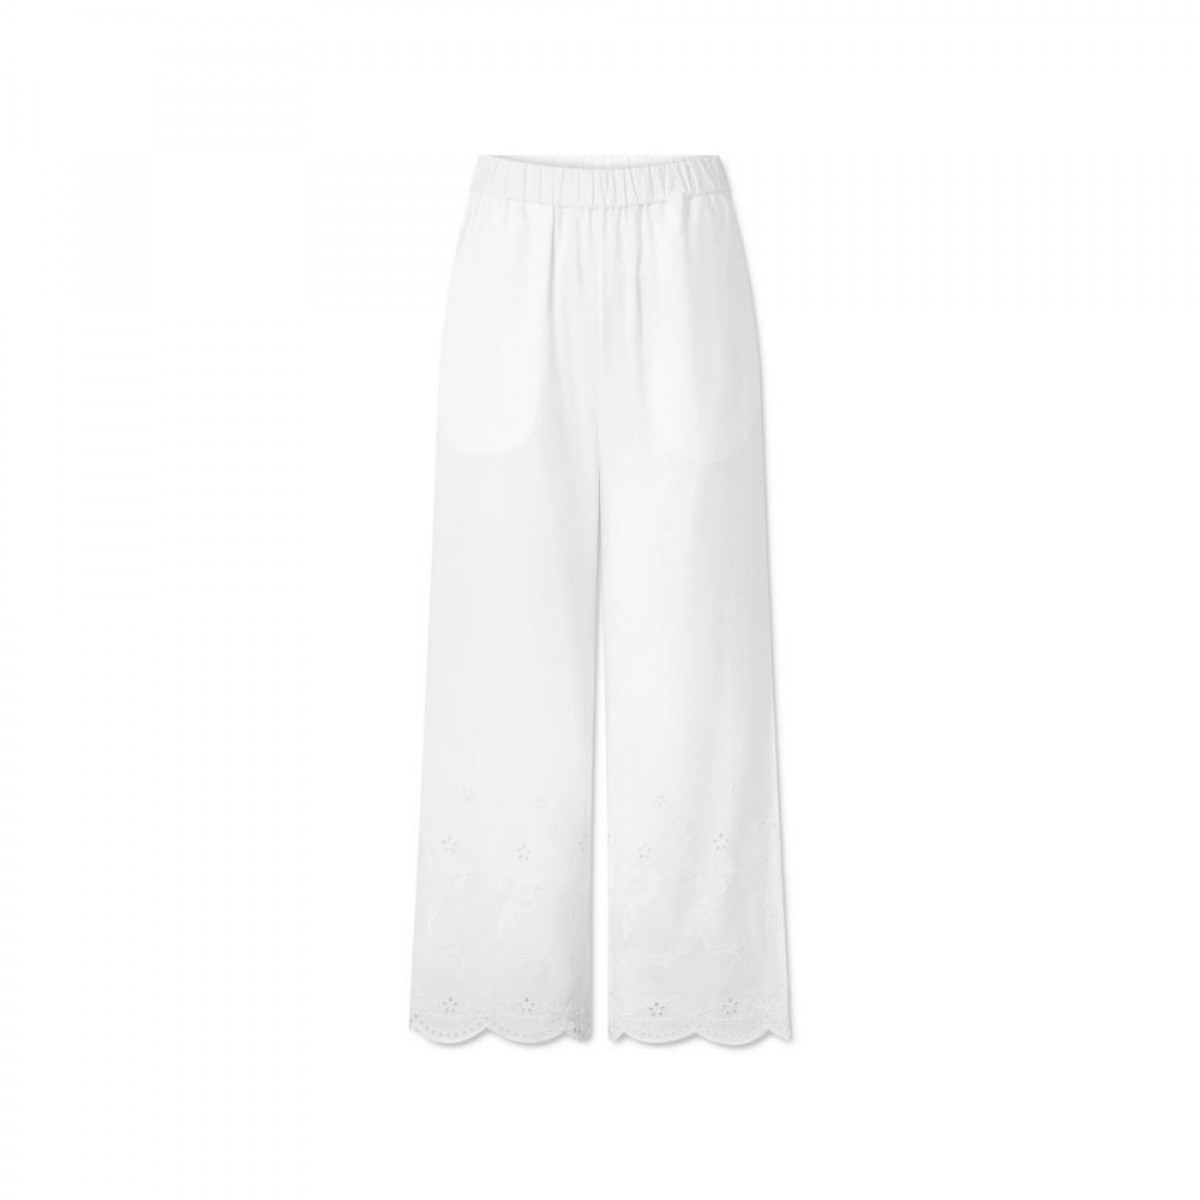 essie pants - white - front